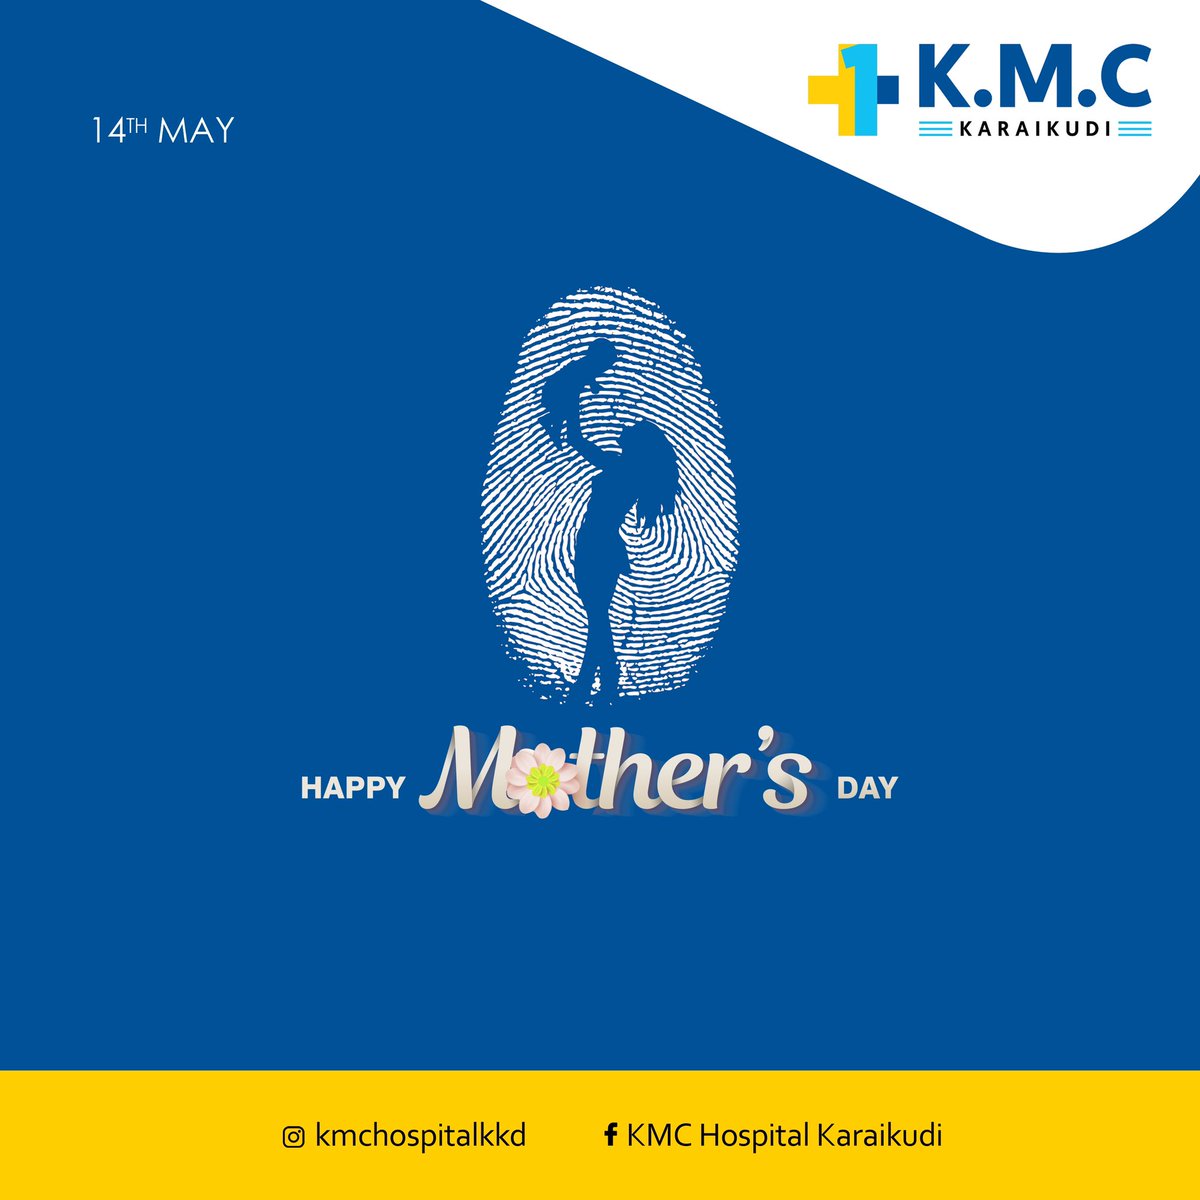 Happy Mother’s Day 🌸

#KMCHospitalKaraikudi #MothersDay #Motherhood #KMCforKkdi #Karaikudi